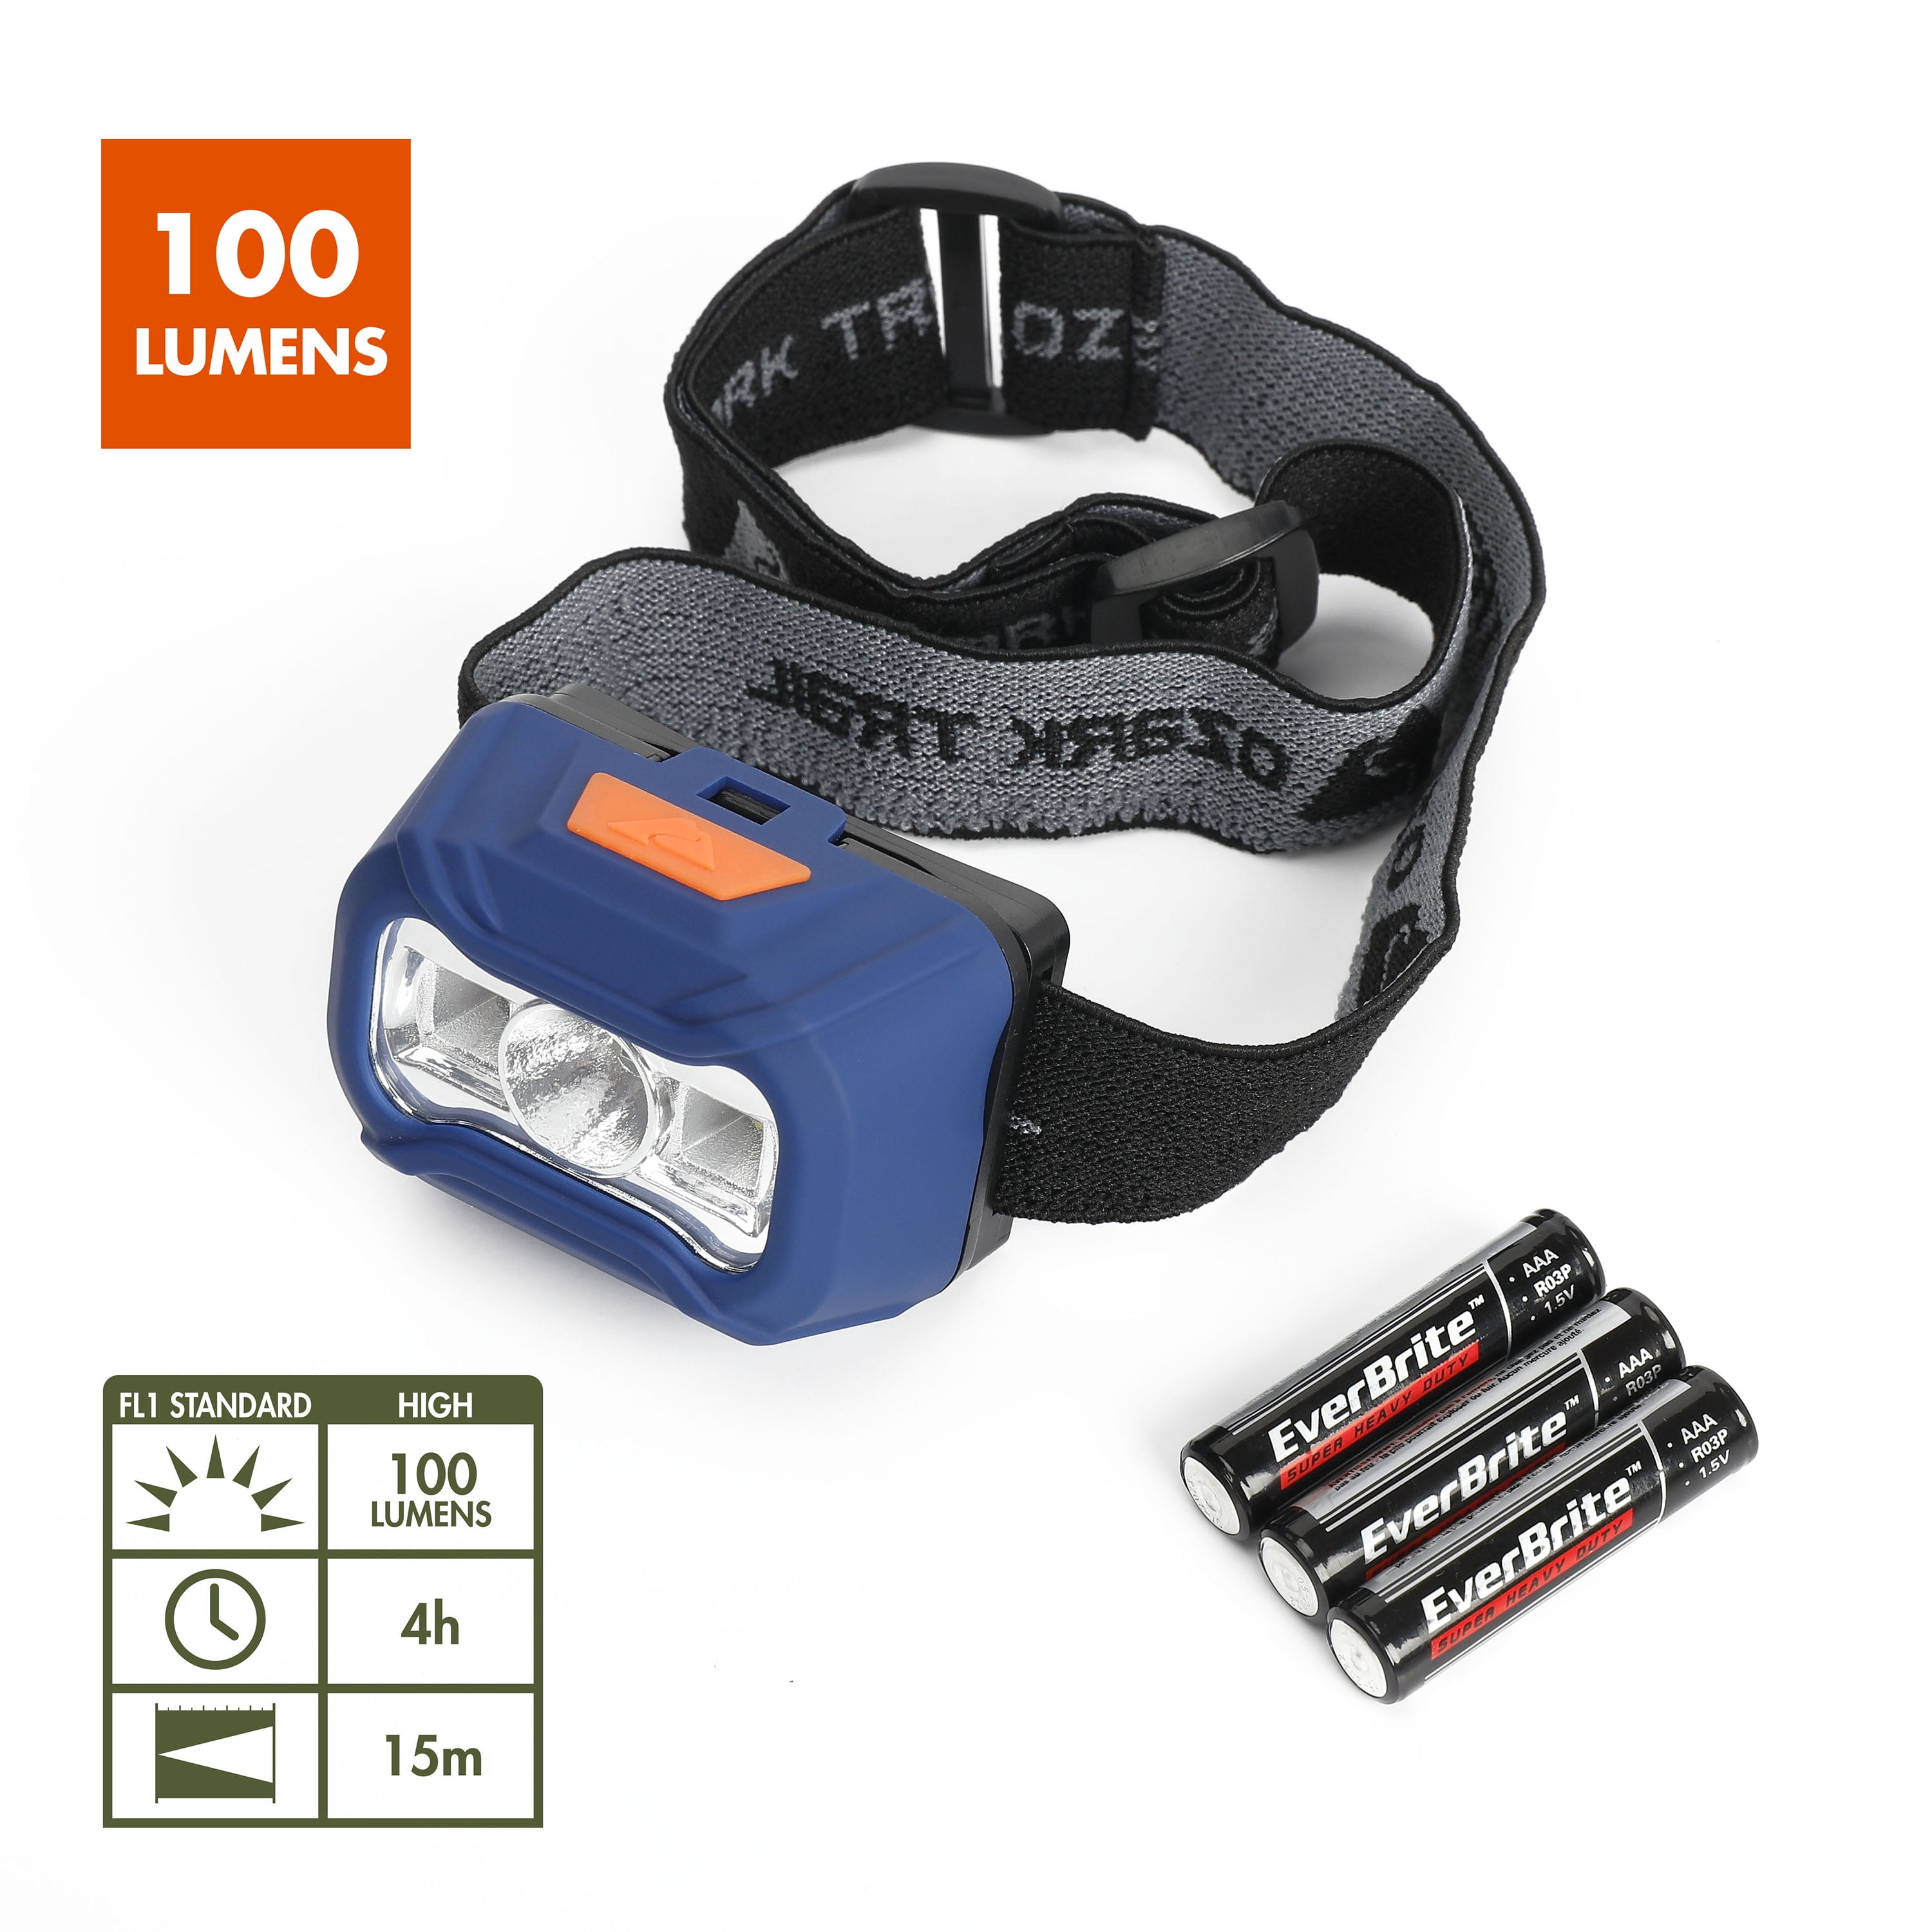 ik wil Digitaal Adelaide Ozark Trail LED 100 Lumens Headlamp, Blue, 3AAA batteries included, Model  31639 - Walmart.com